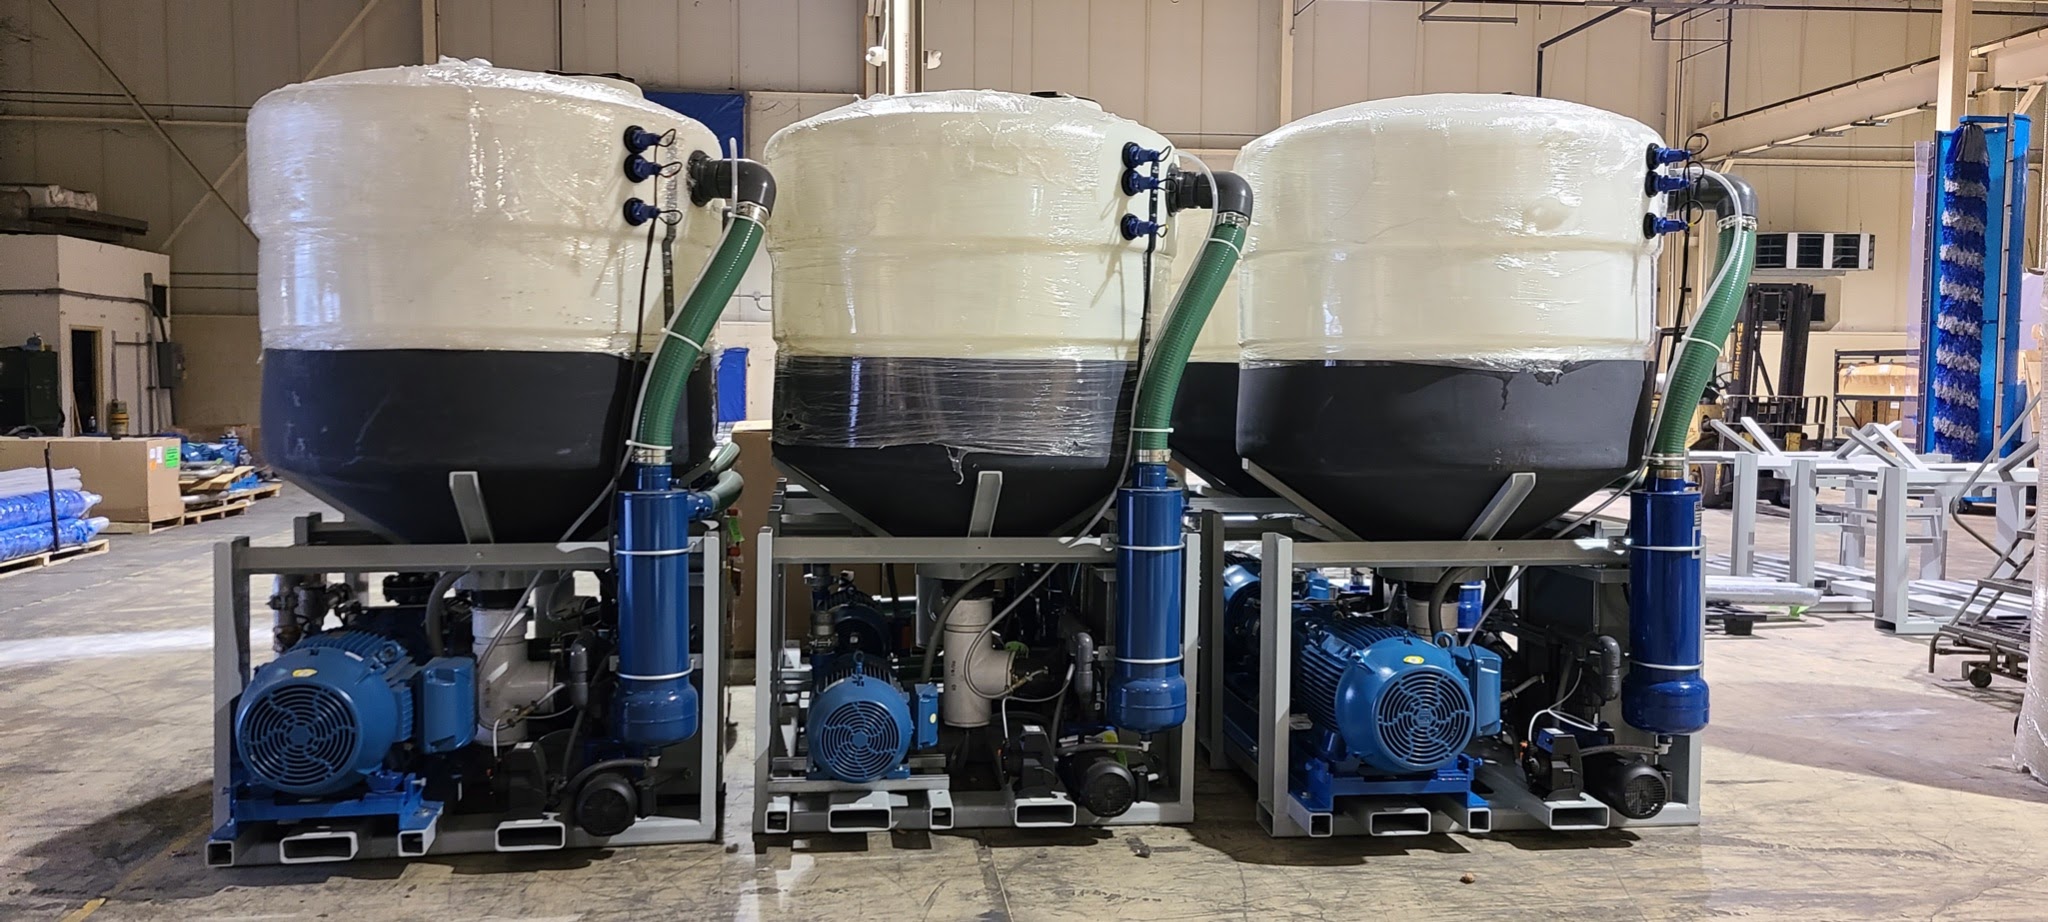 Three large detergent storage and distribution vats